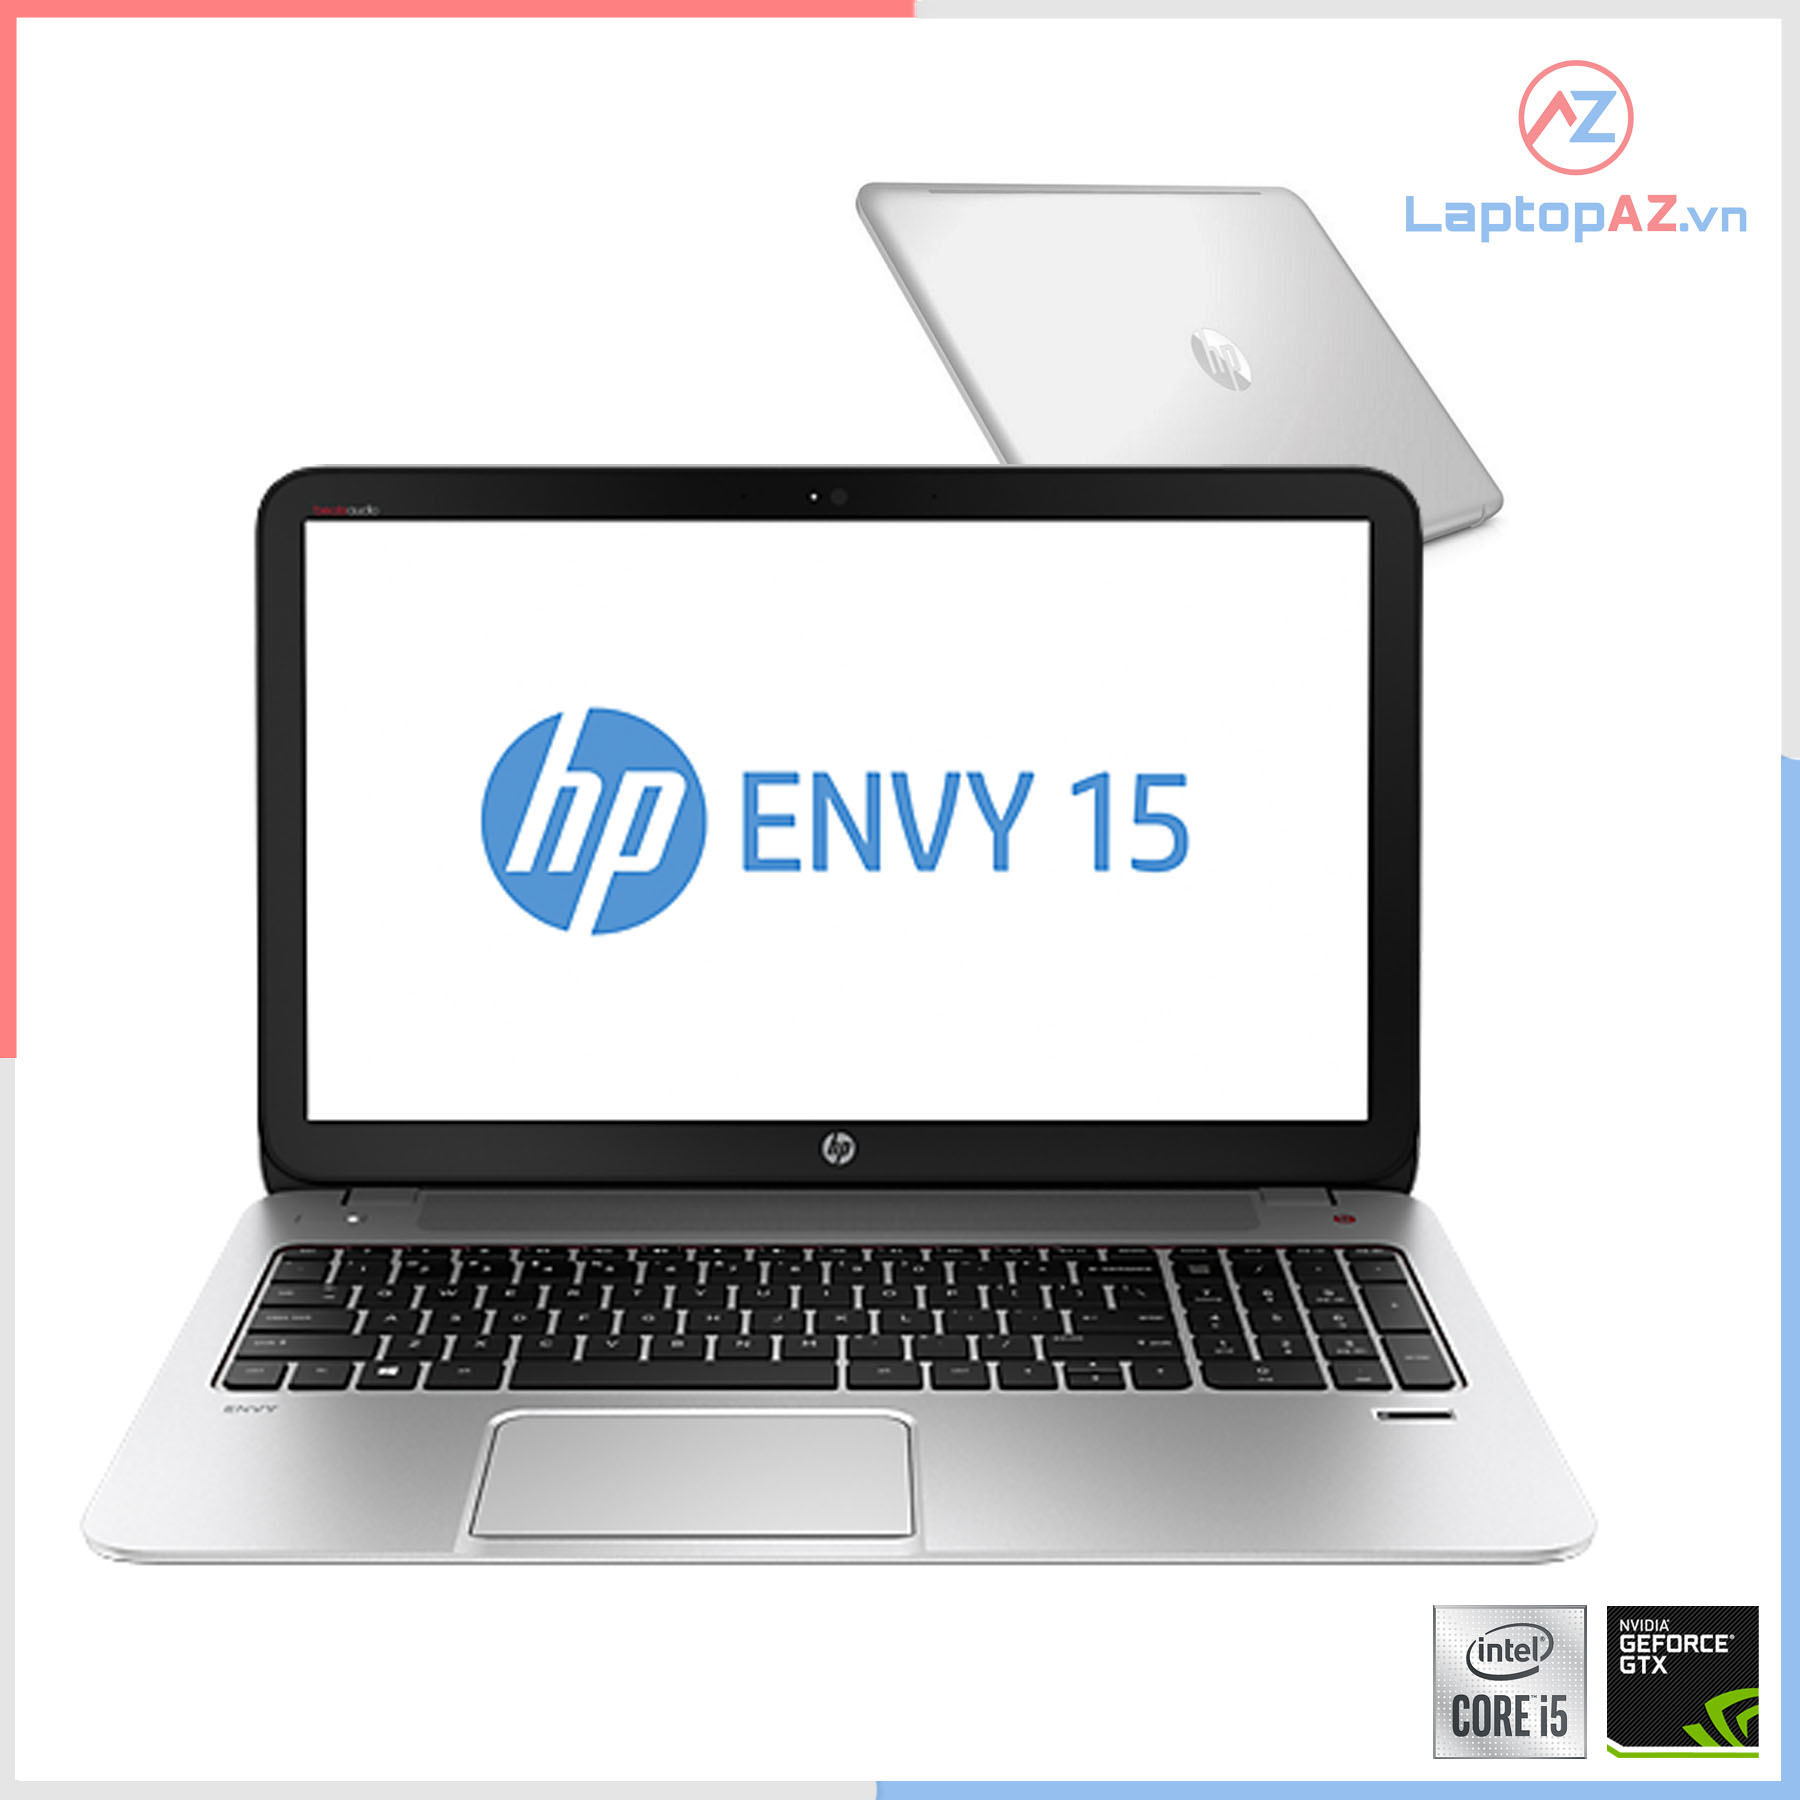 Laptop HP ENVY 15(Core i5-6200U, 8GB, 500GB, VGA 4GB NVIDIA GeForce GTX 950M, 15.6 FullHD)